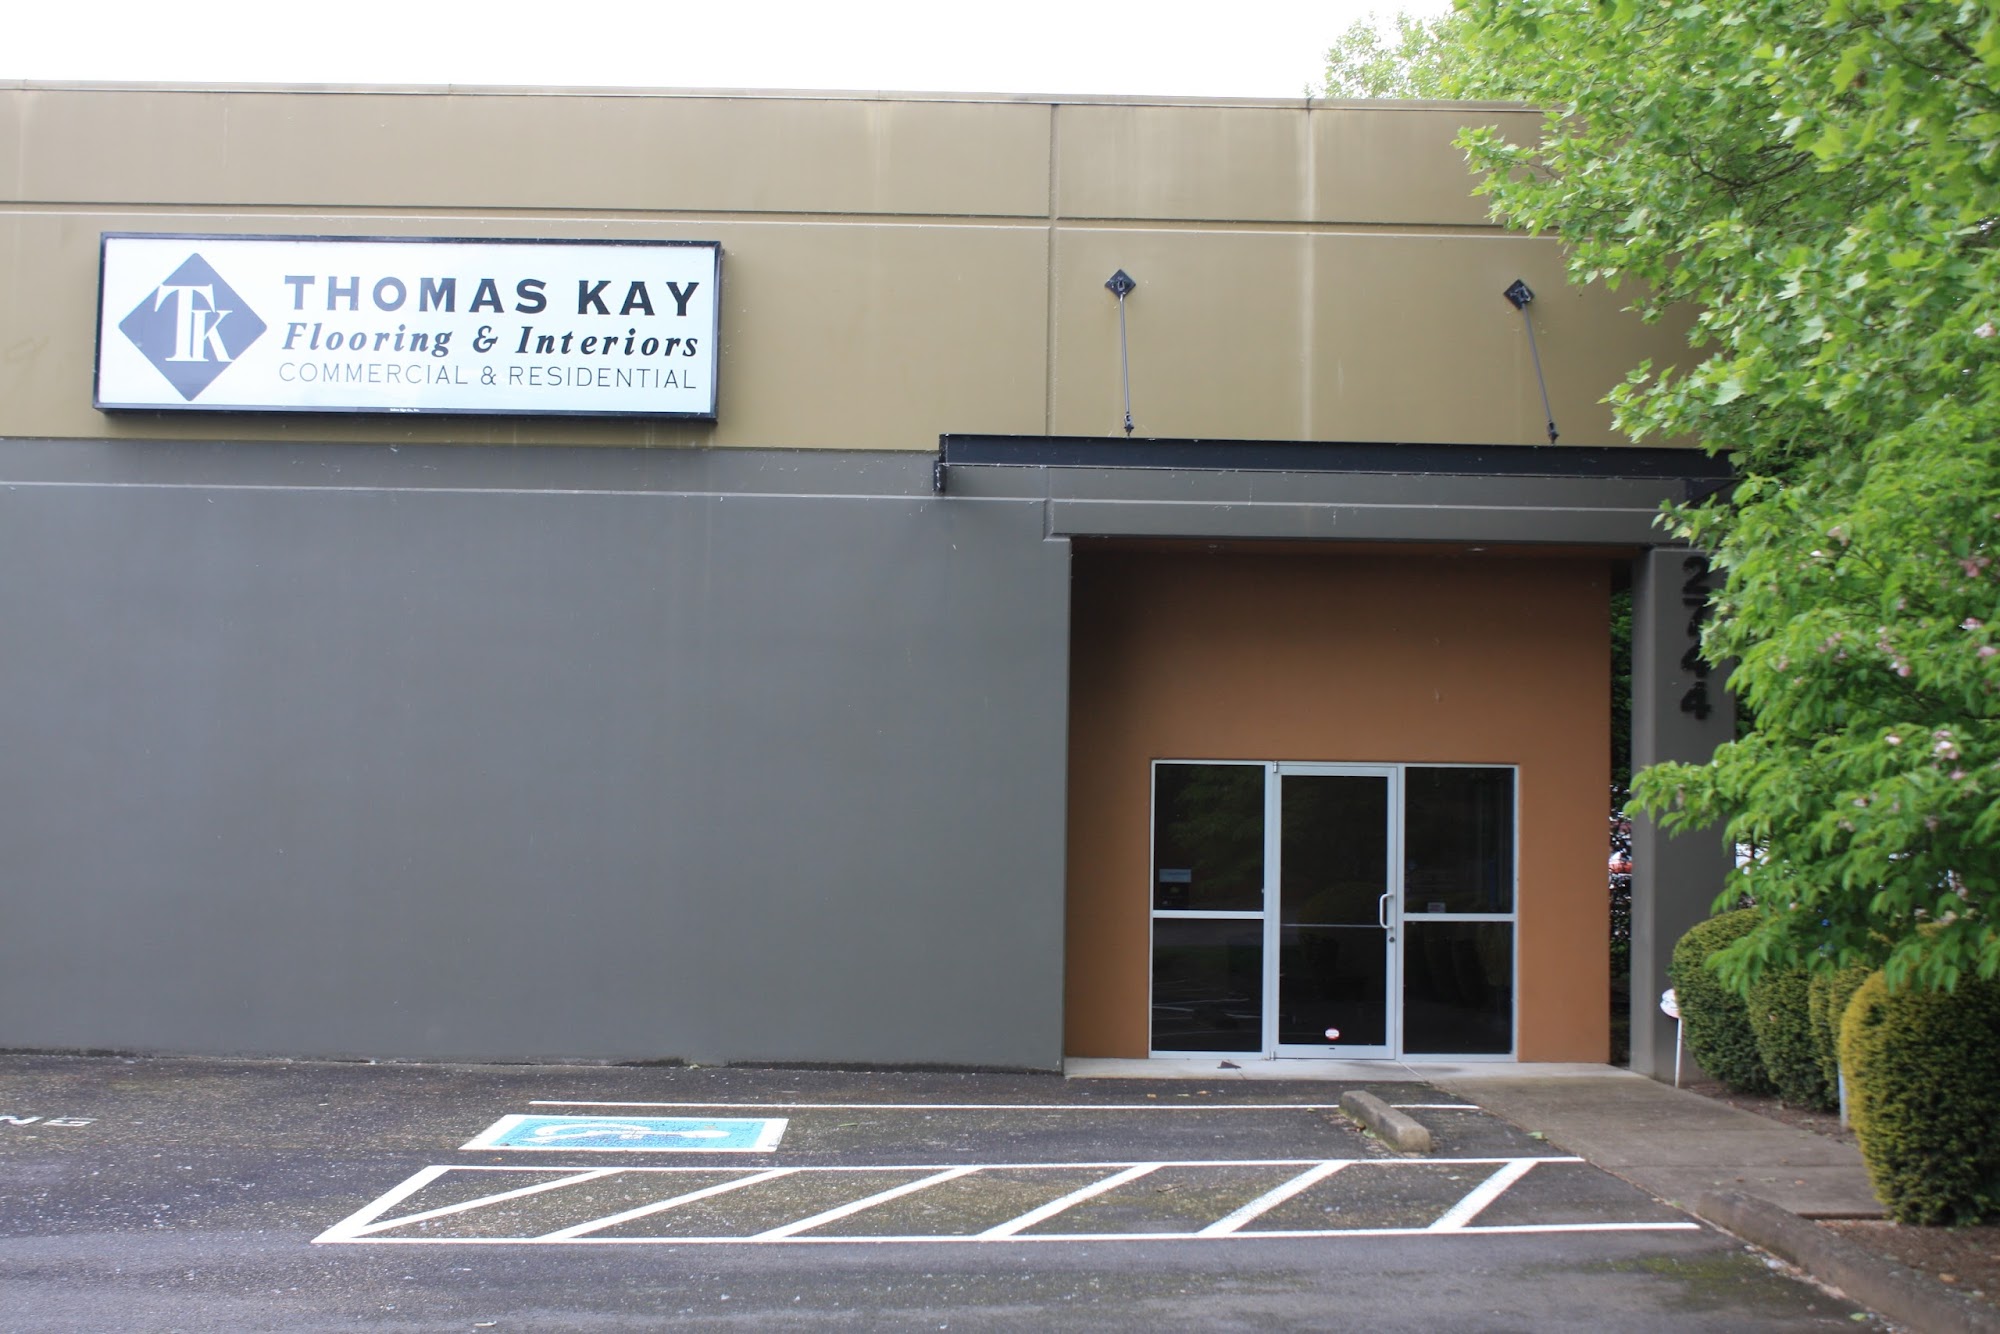 Thomas Kay Flooring & Interiors